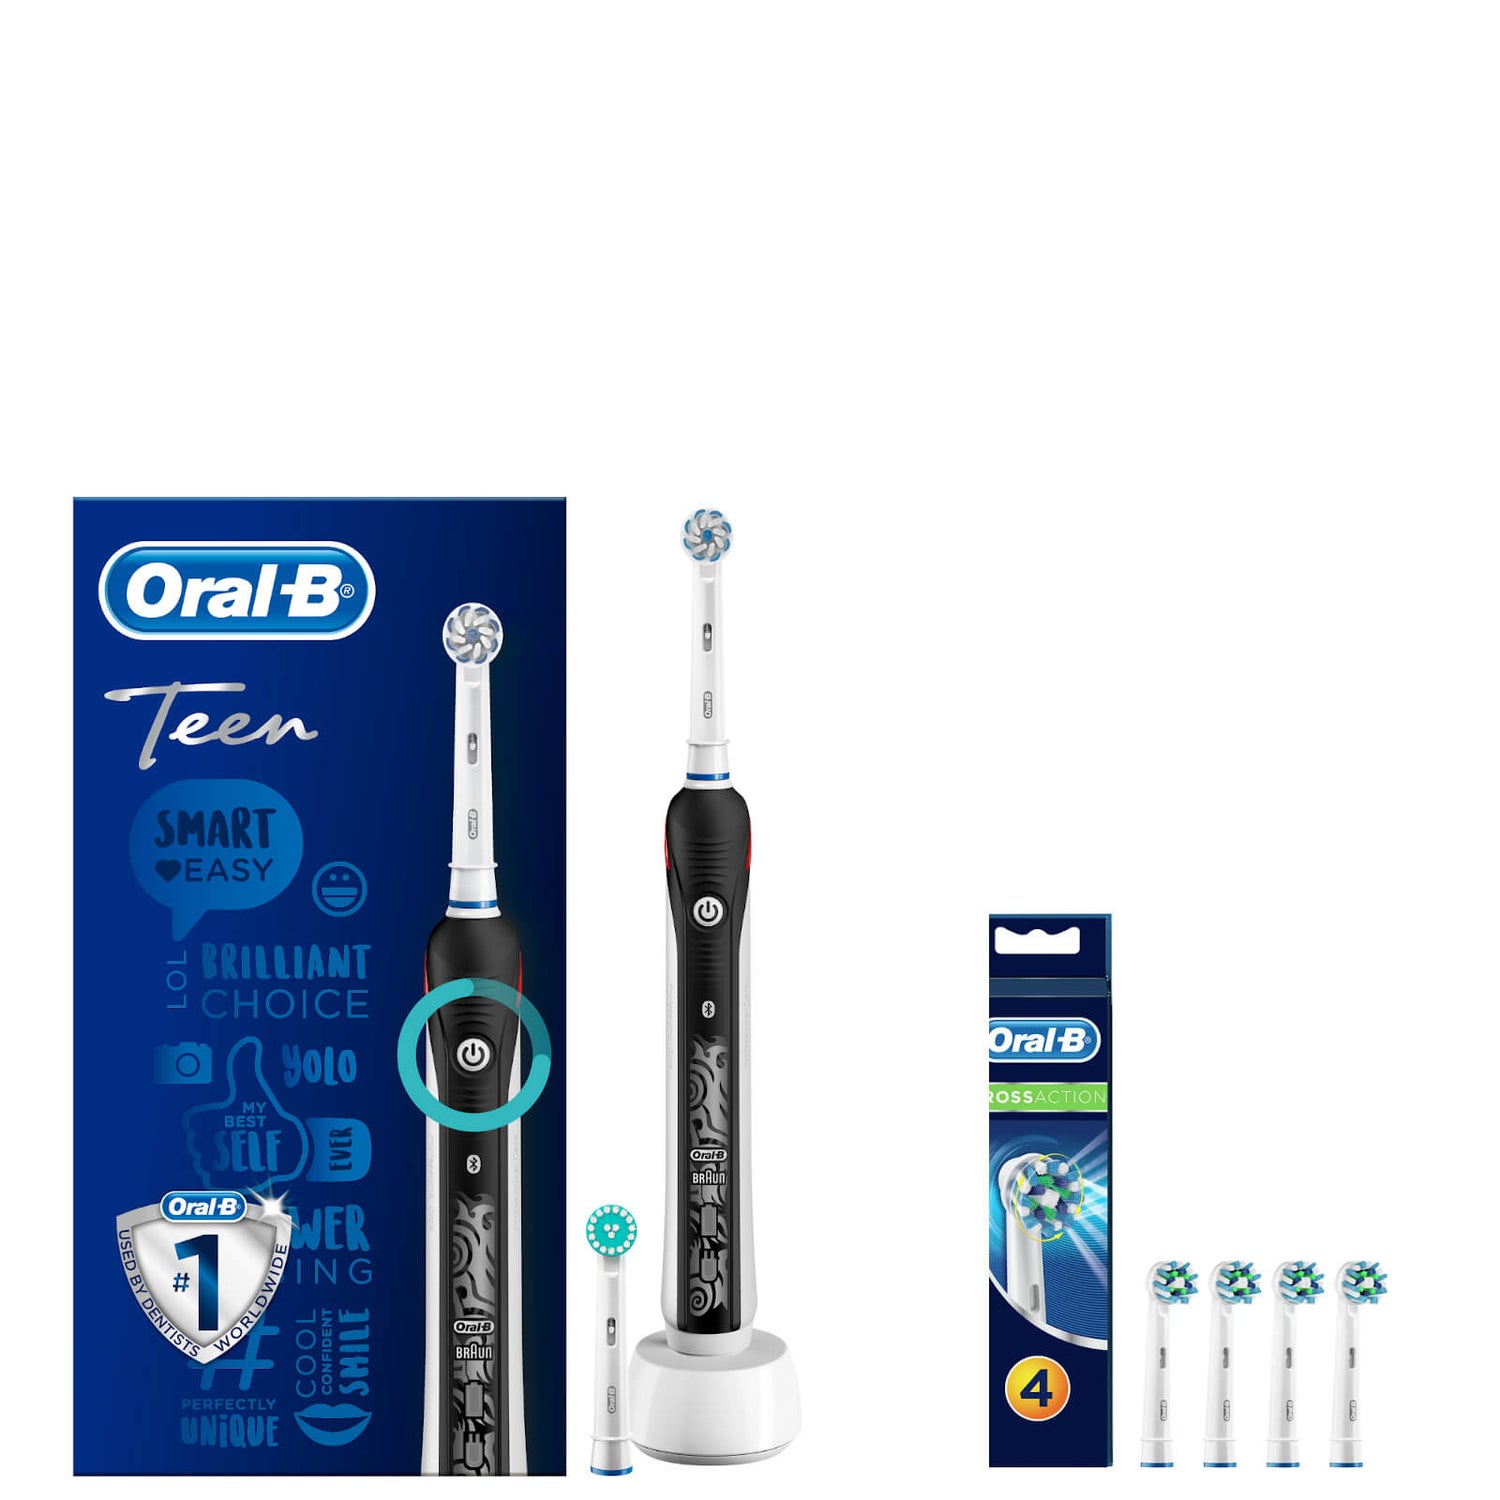 Oral-B Teen Elektrische Tandenborstel Zwart Met Exclusieve Reisetui